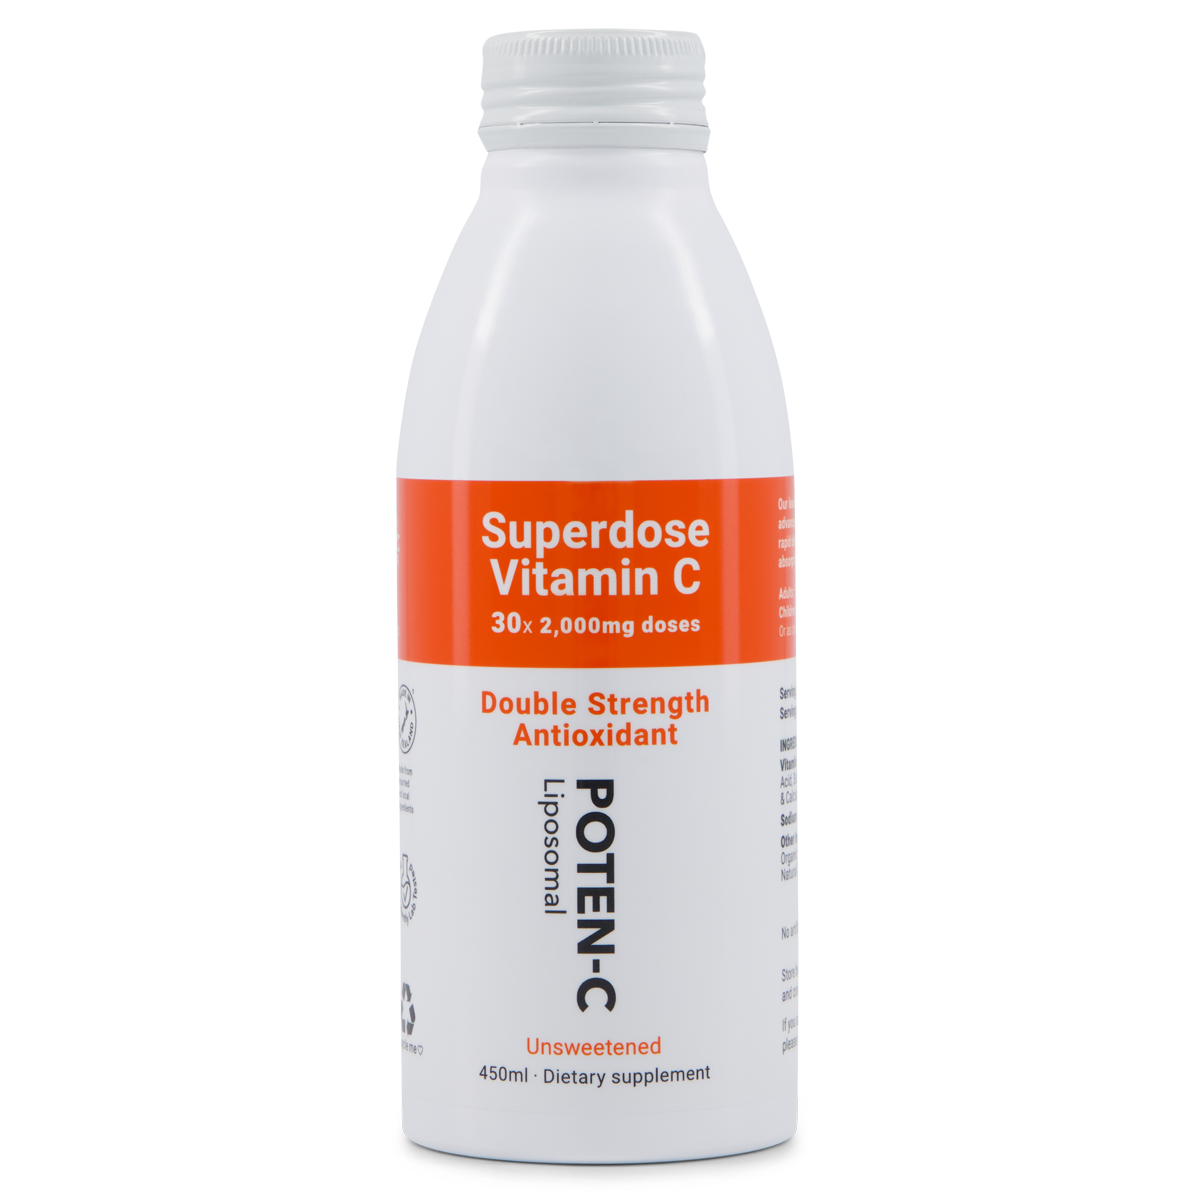 Poten-C Superdose Liposomal Vitamin C - 30x 2000mg Doses + FREE Gift with Purchase (75ml 1000mg Liposomal Vitamin C)